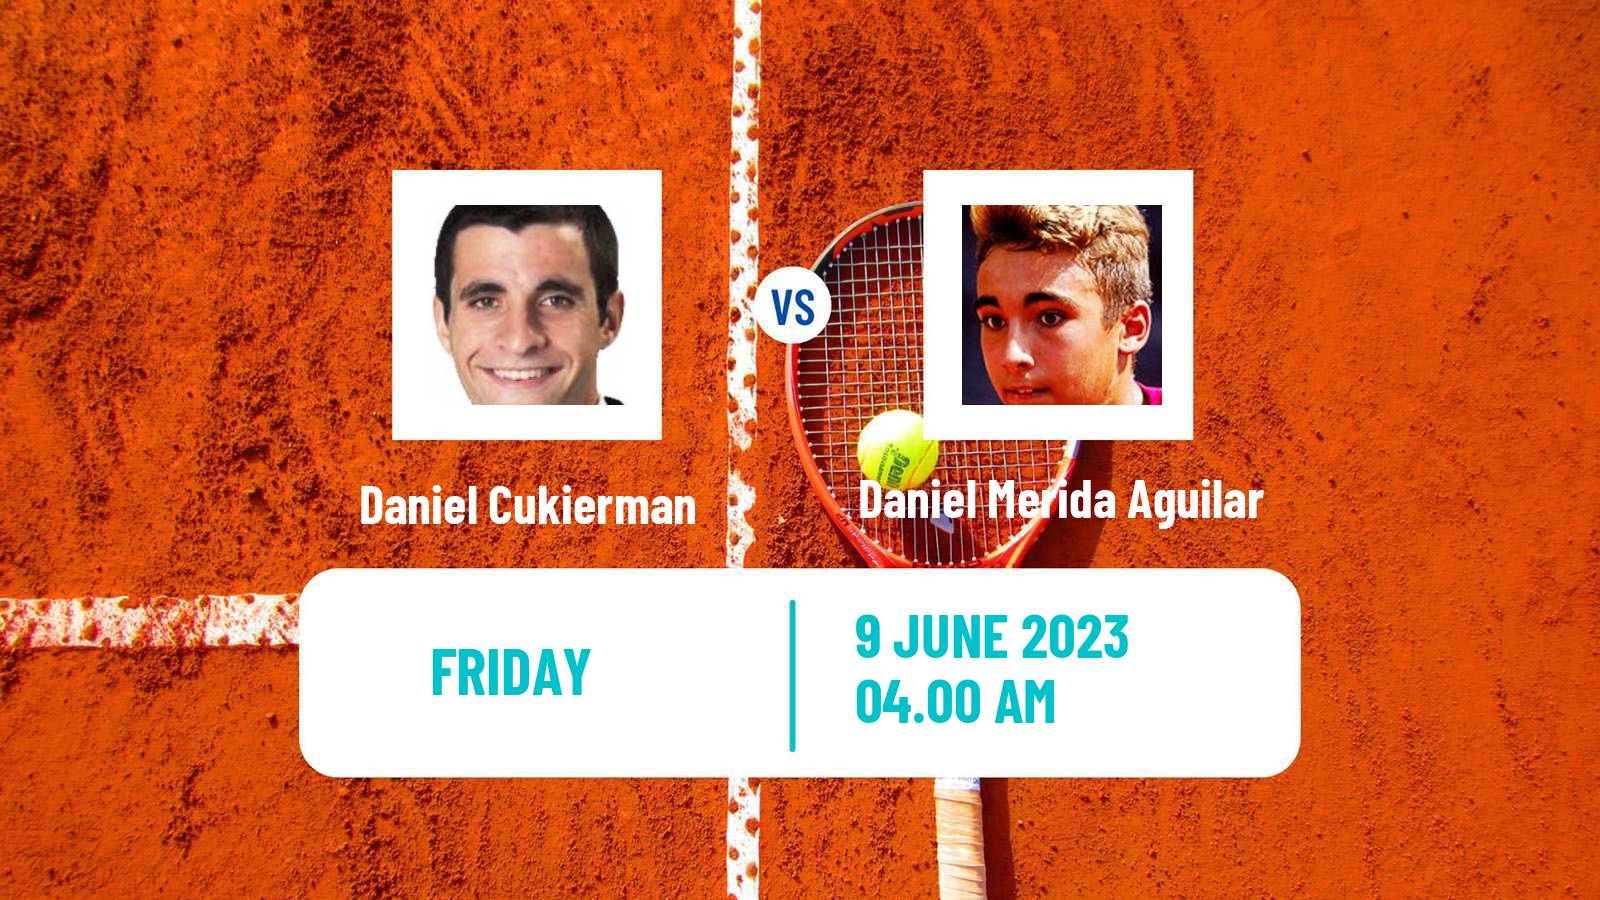 Tennis ITF M25 Cordoba Men Daniel Cukierman - Daniel Merida Aguilar